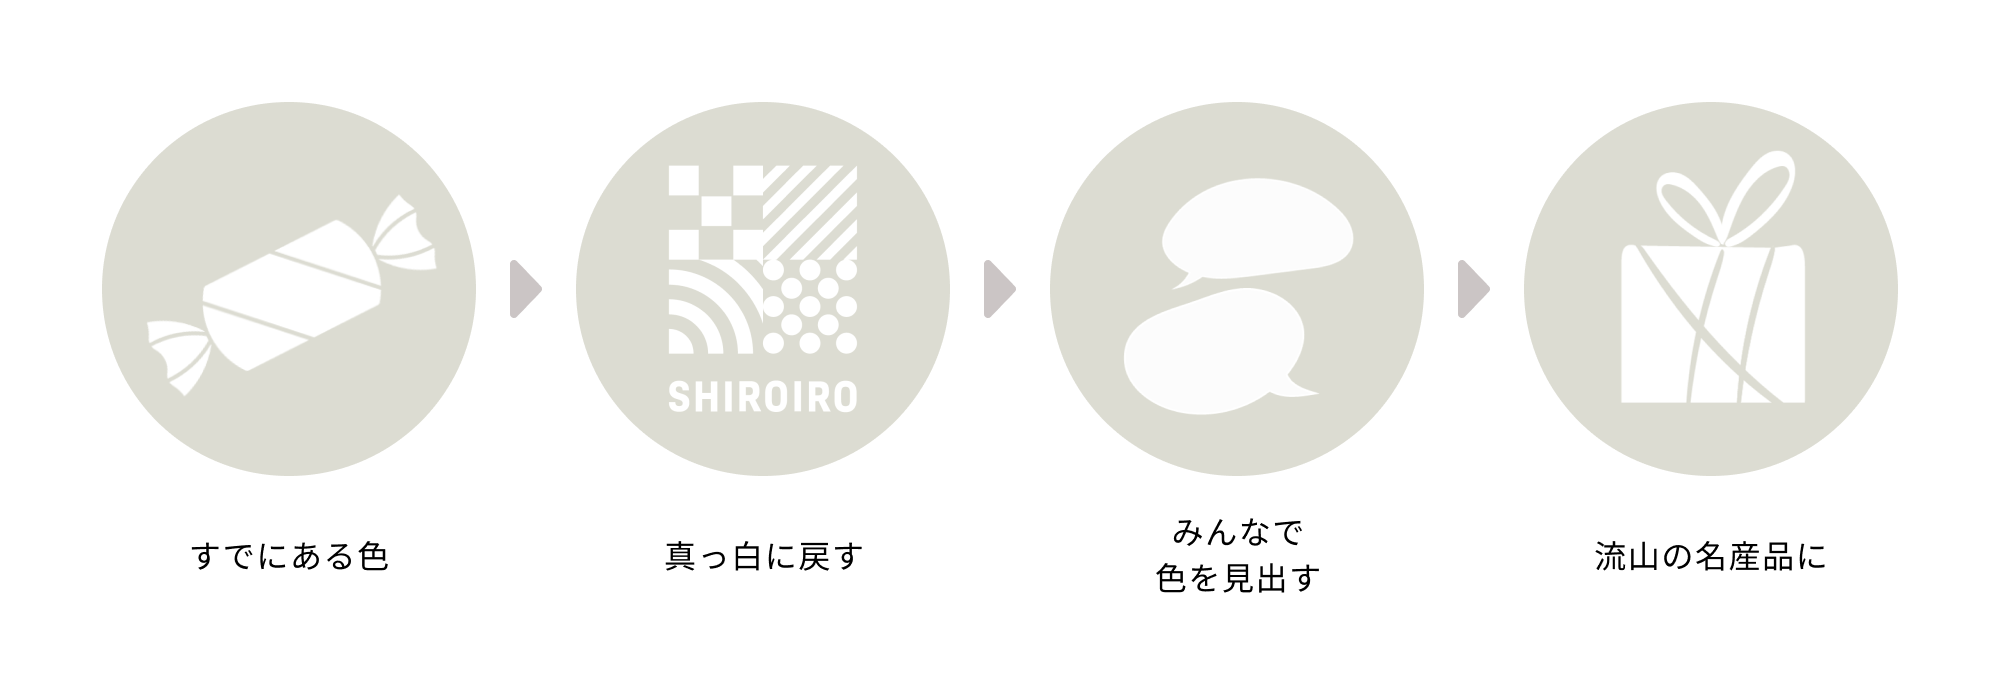 about shiroiro flow